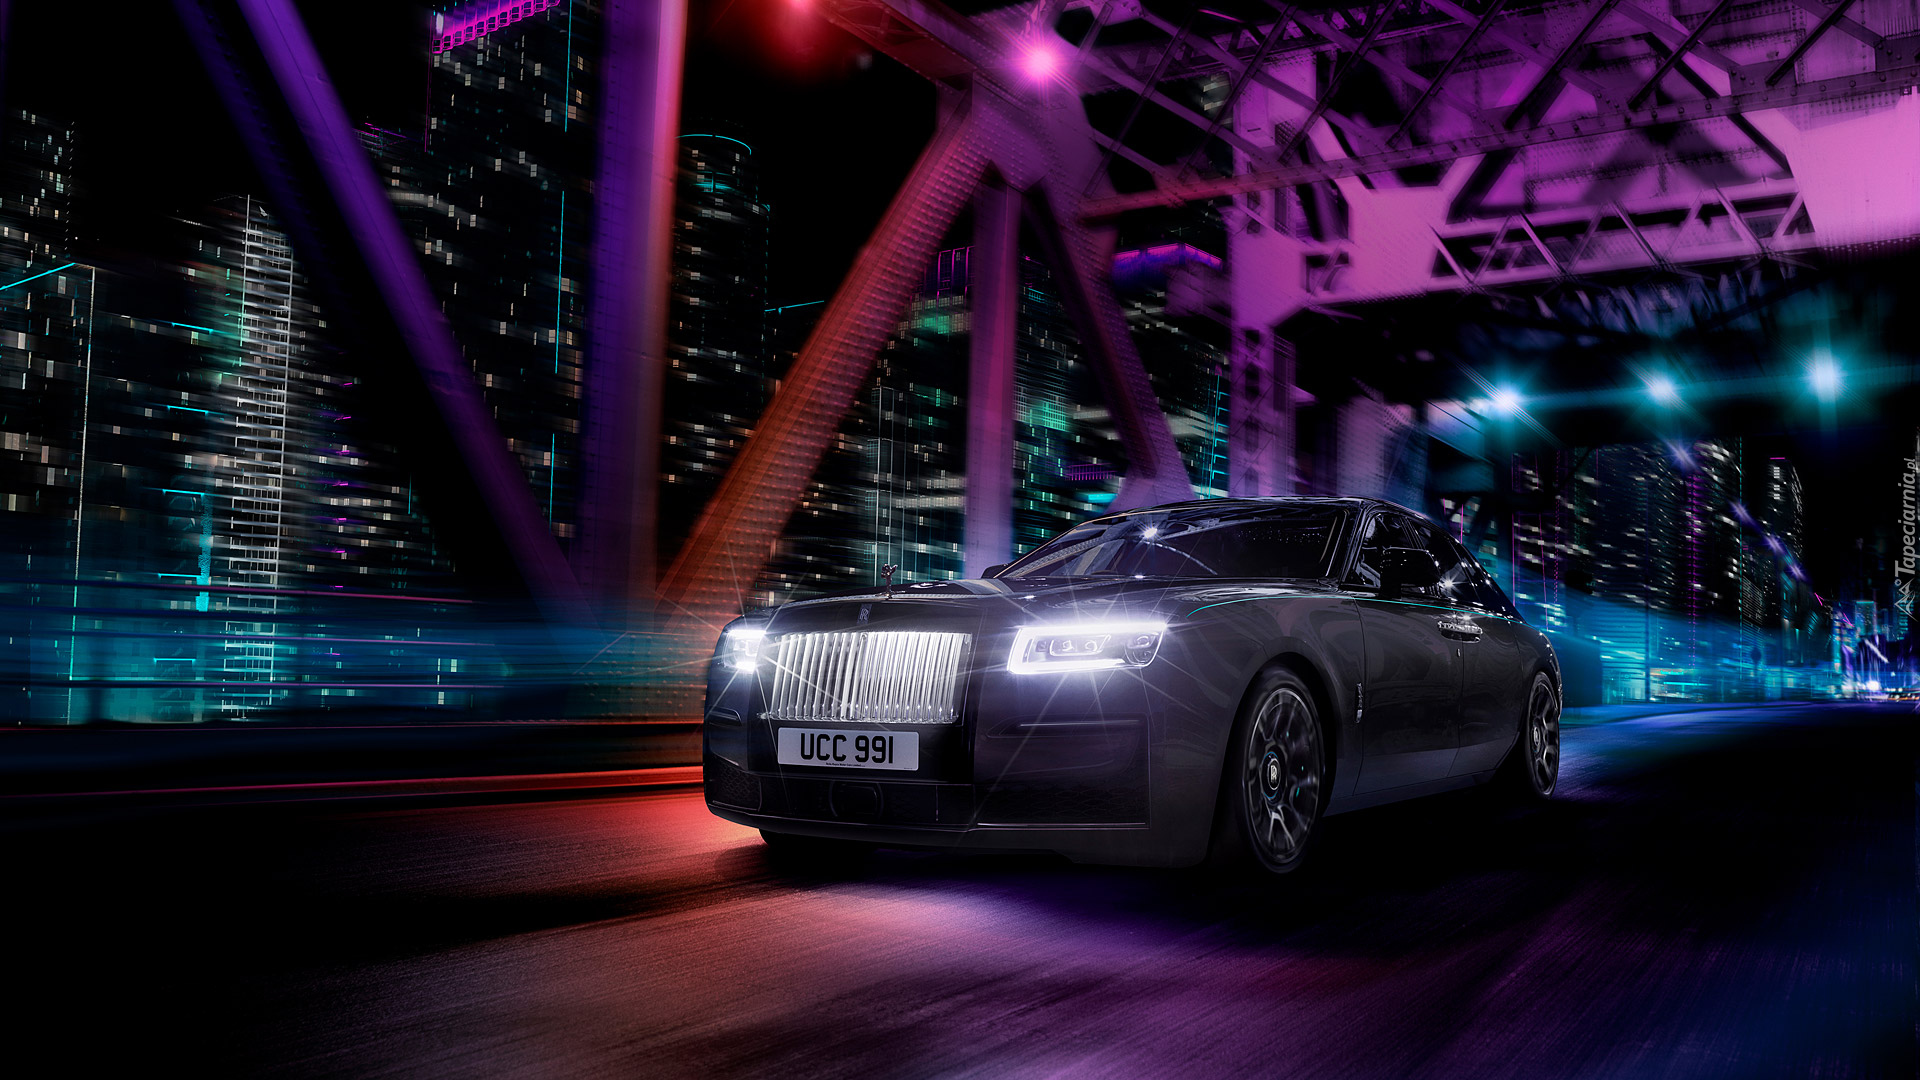 Rolls-Royce Ghost Black Badge, Światła